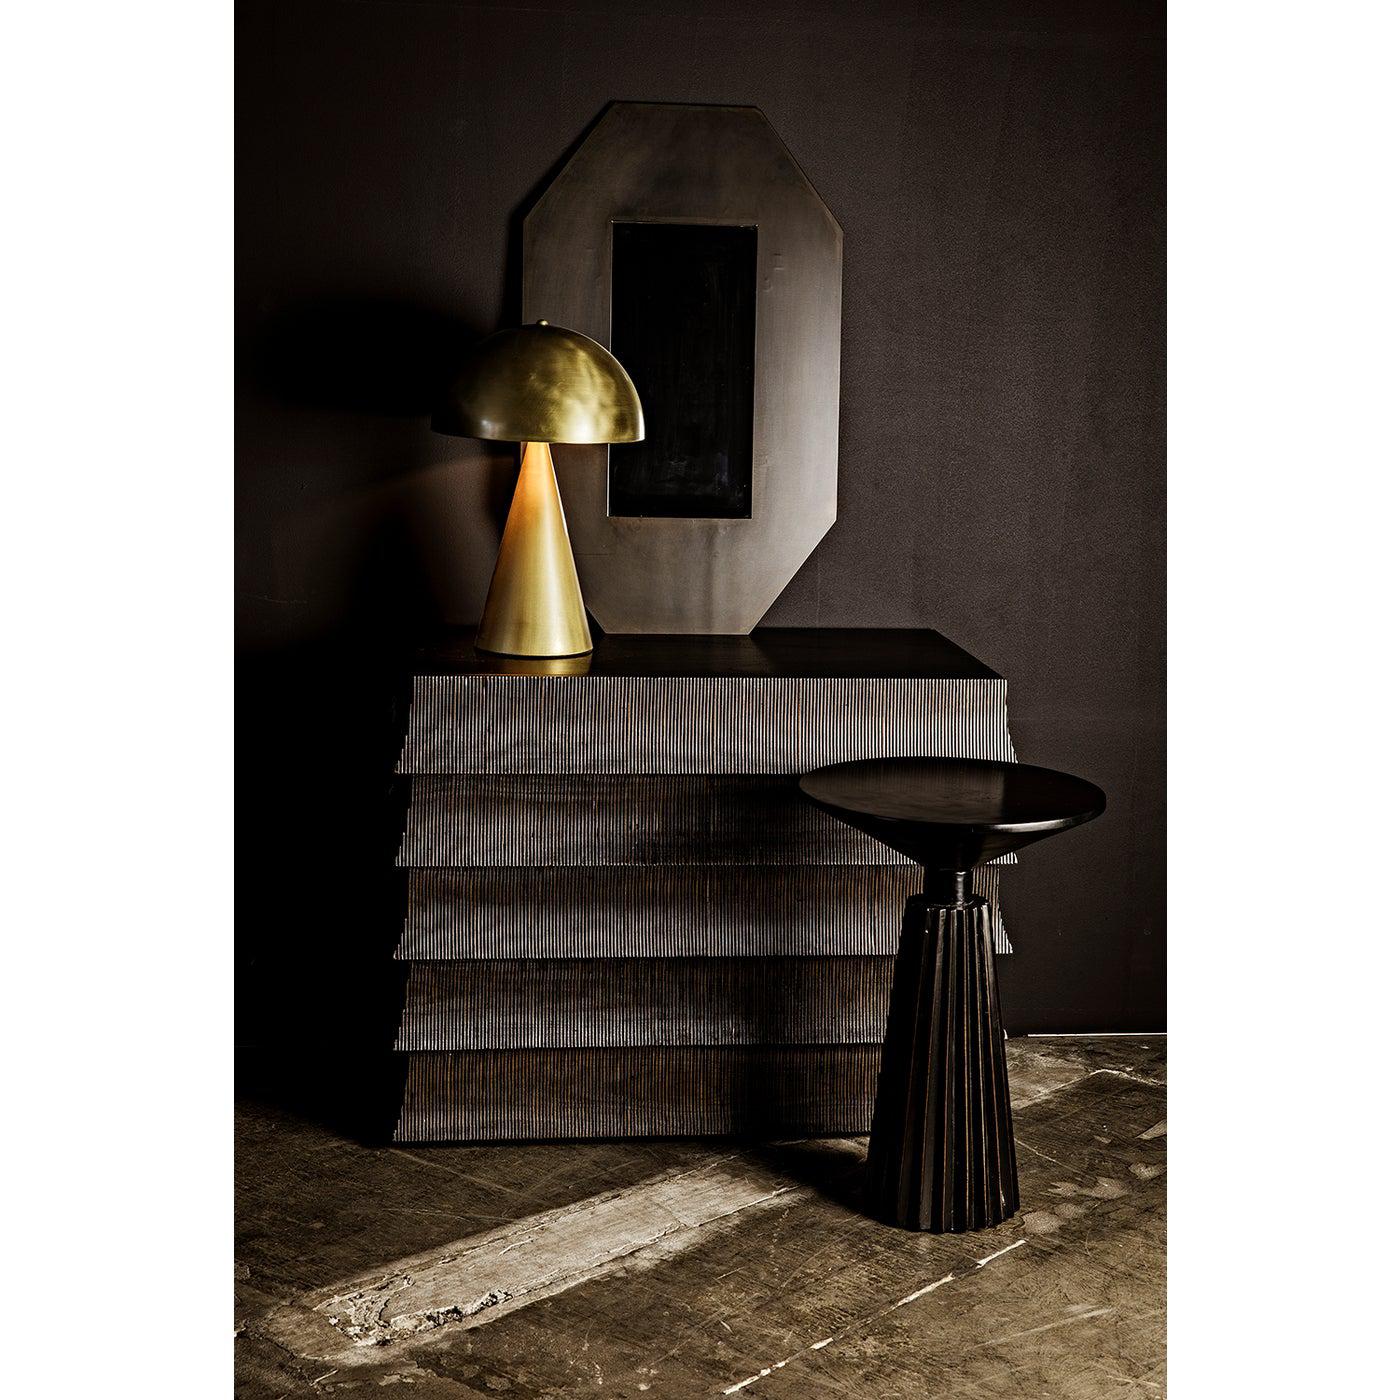 Noir Orson Side Table, Hand Rubbed Black-Noir Furniture-Blue Hand Home